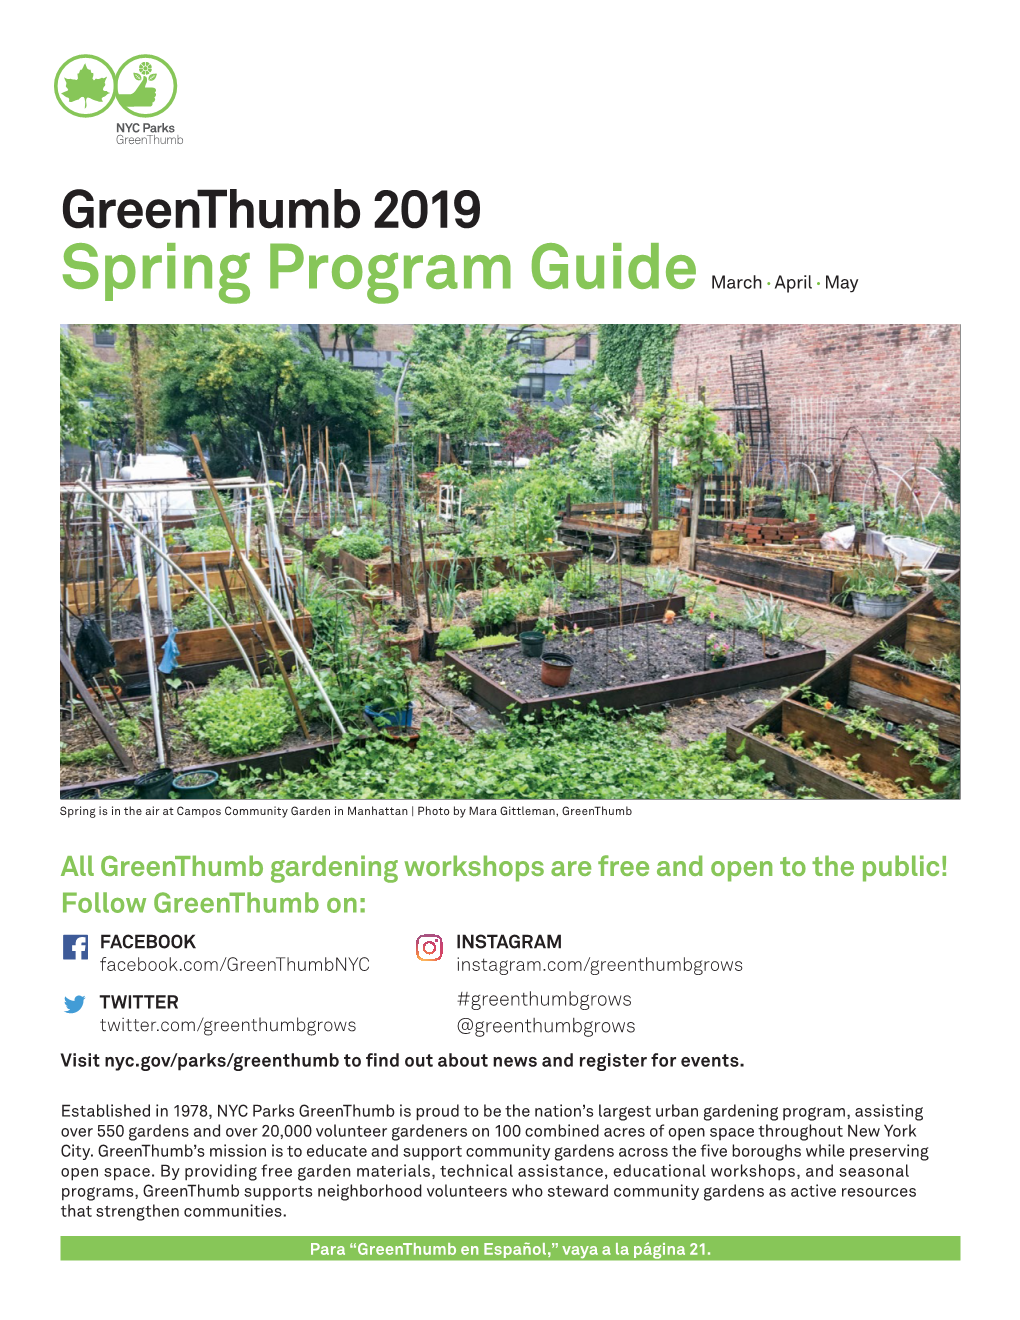 Greenthumb 2019 Spring Program Guide